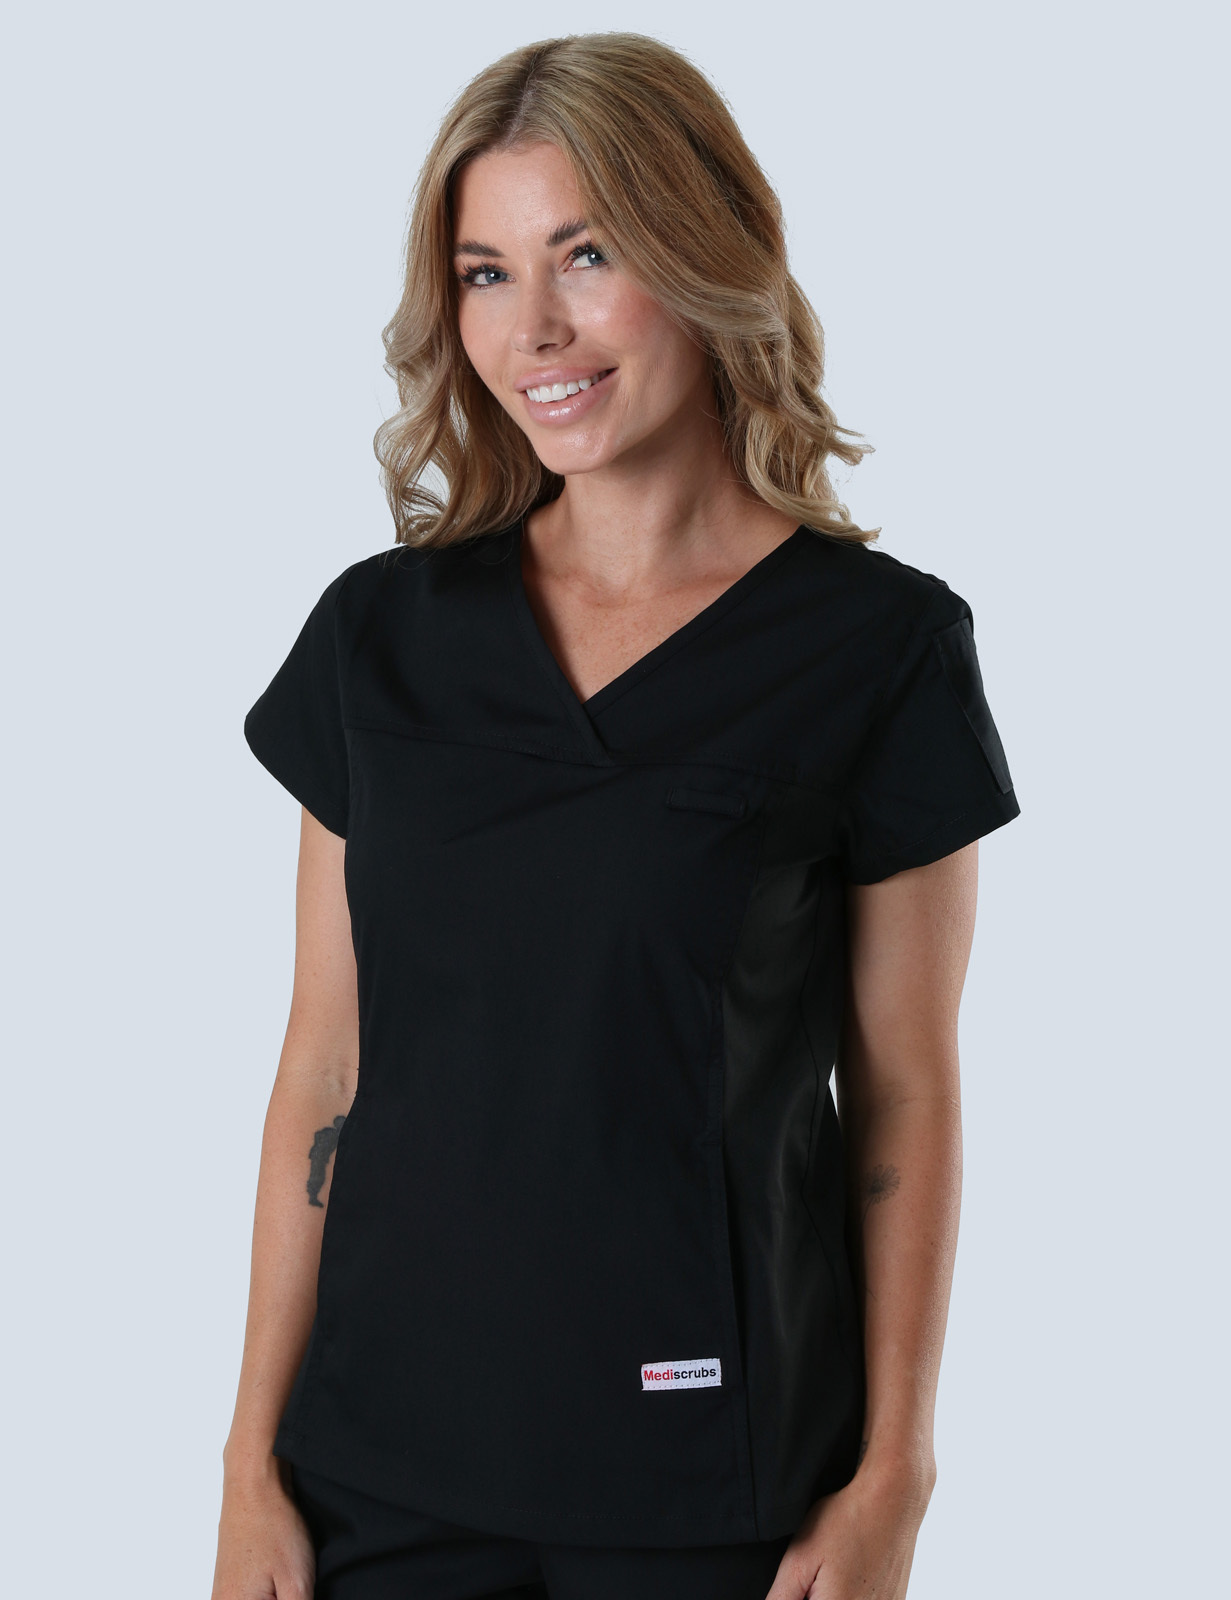 Northern Hospital - ED Nurse (Women's Fit Spandex Scrub Top in Black incl Logos)